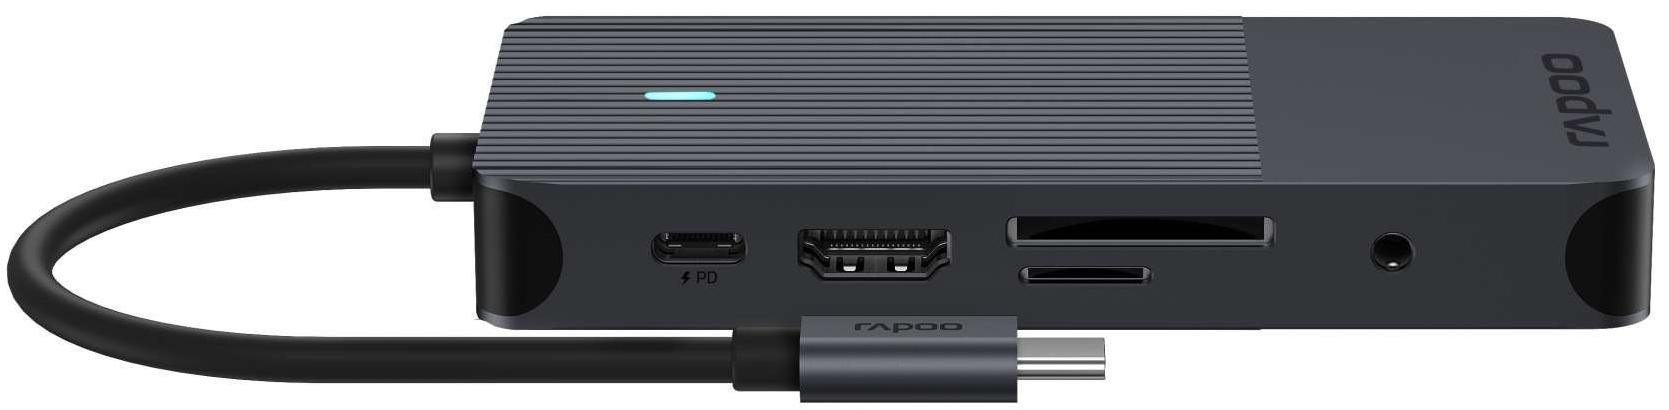 USB-хаб Rapoo 8in1 UCM-2004